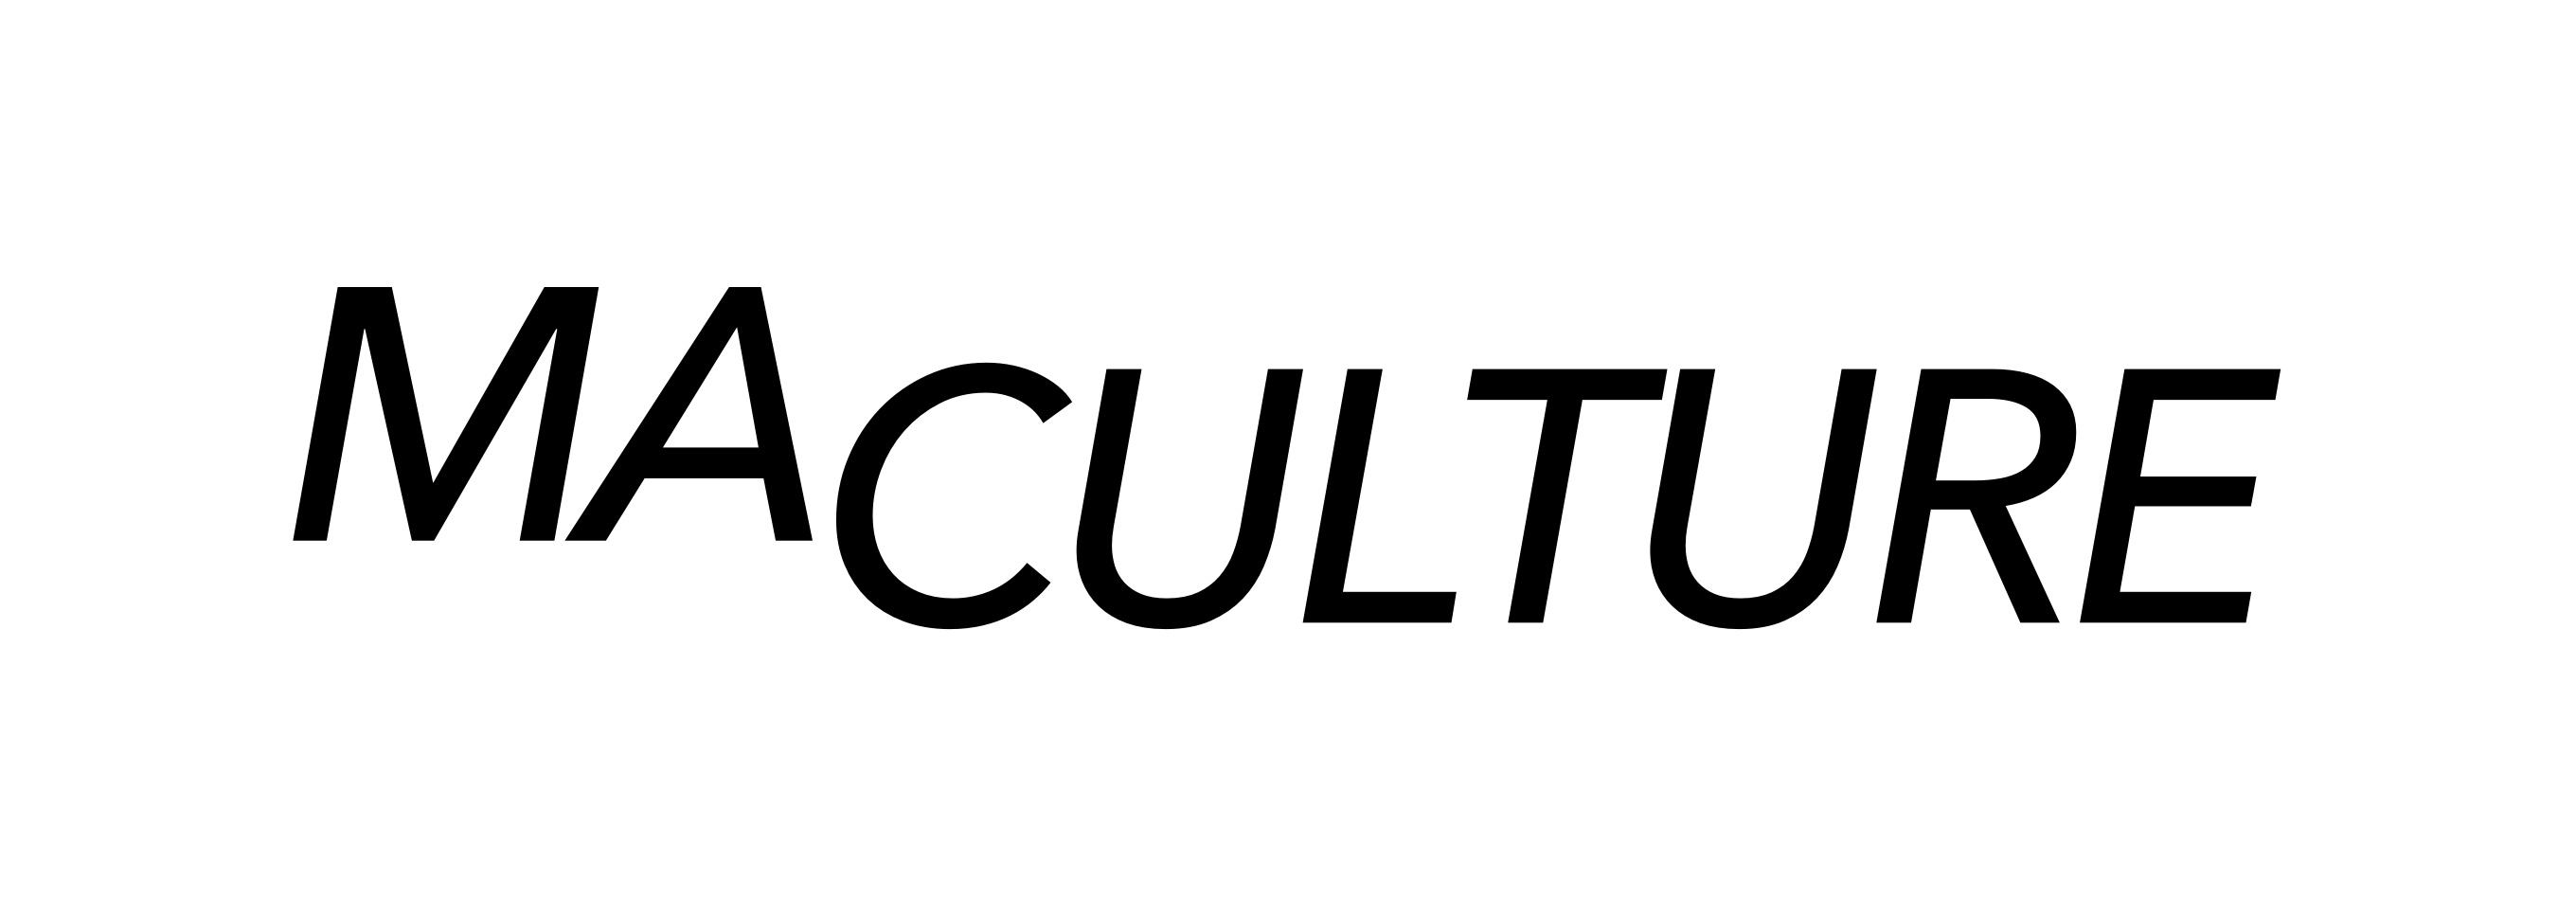 maculture-logo.jpg